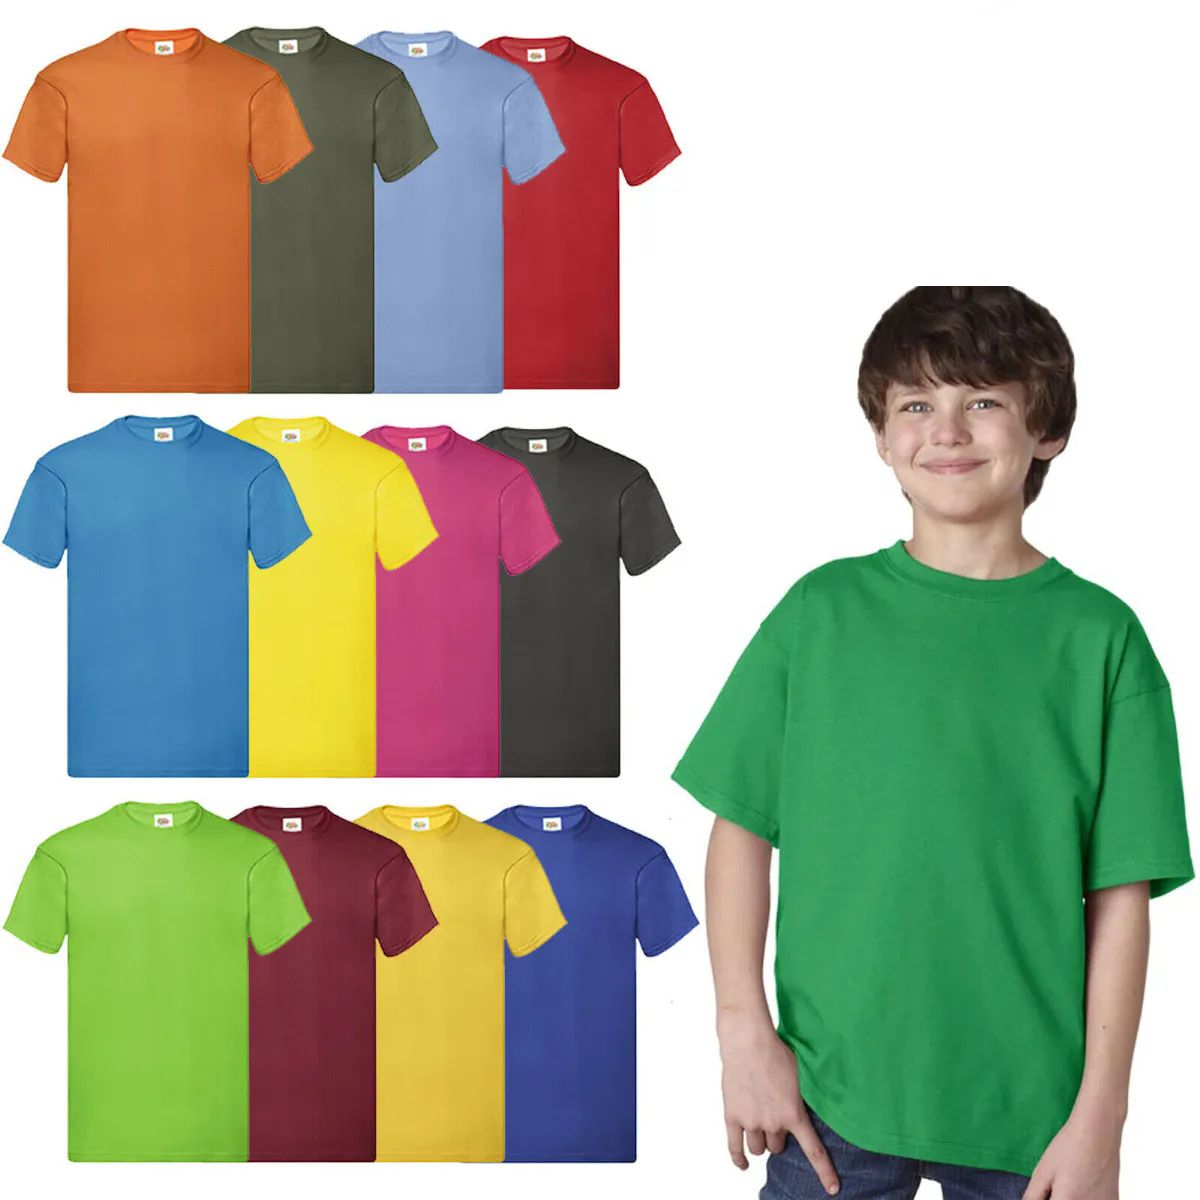 144 Bulk Billion Hats Kids Youth Cotton Assorted Colors T Shirts Size M